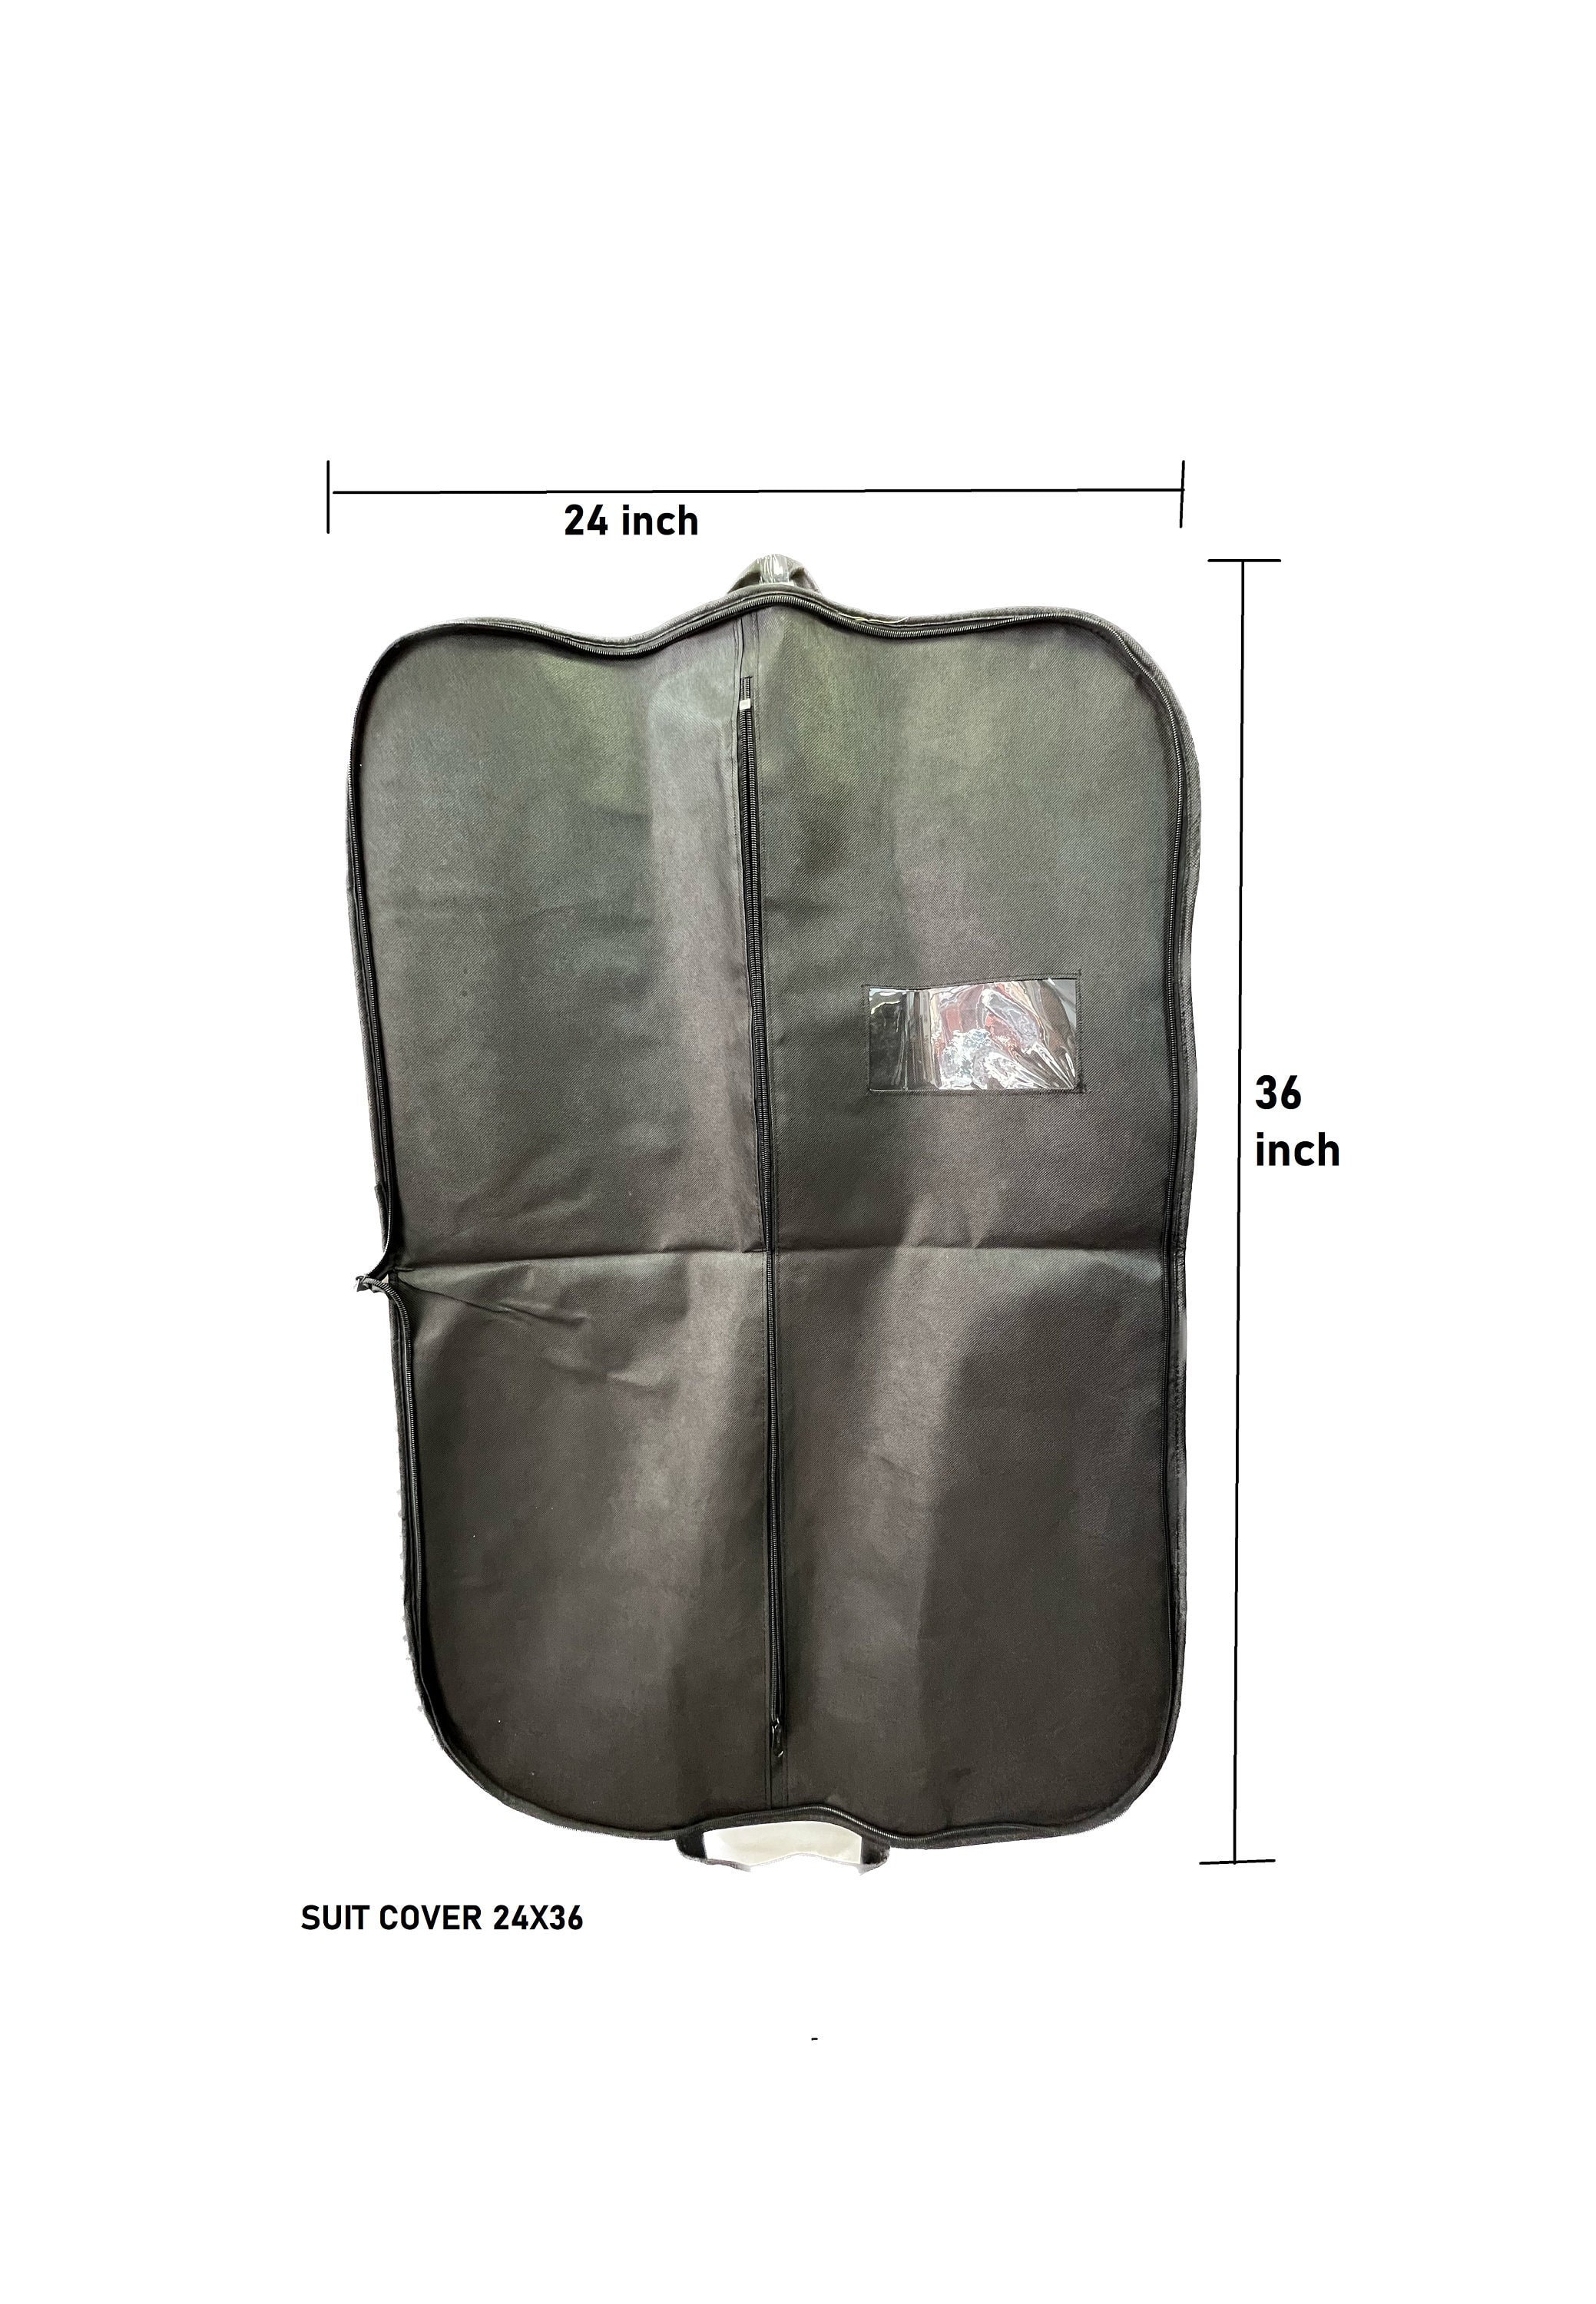 MONCLER Travel and Storage Garment Case Cover Bag  eBay